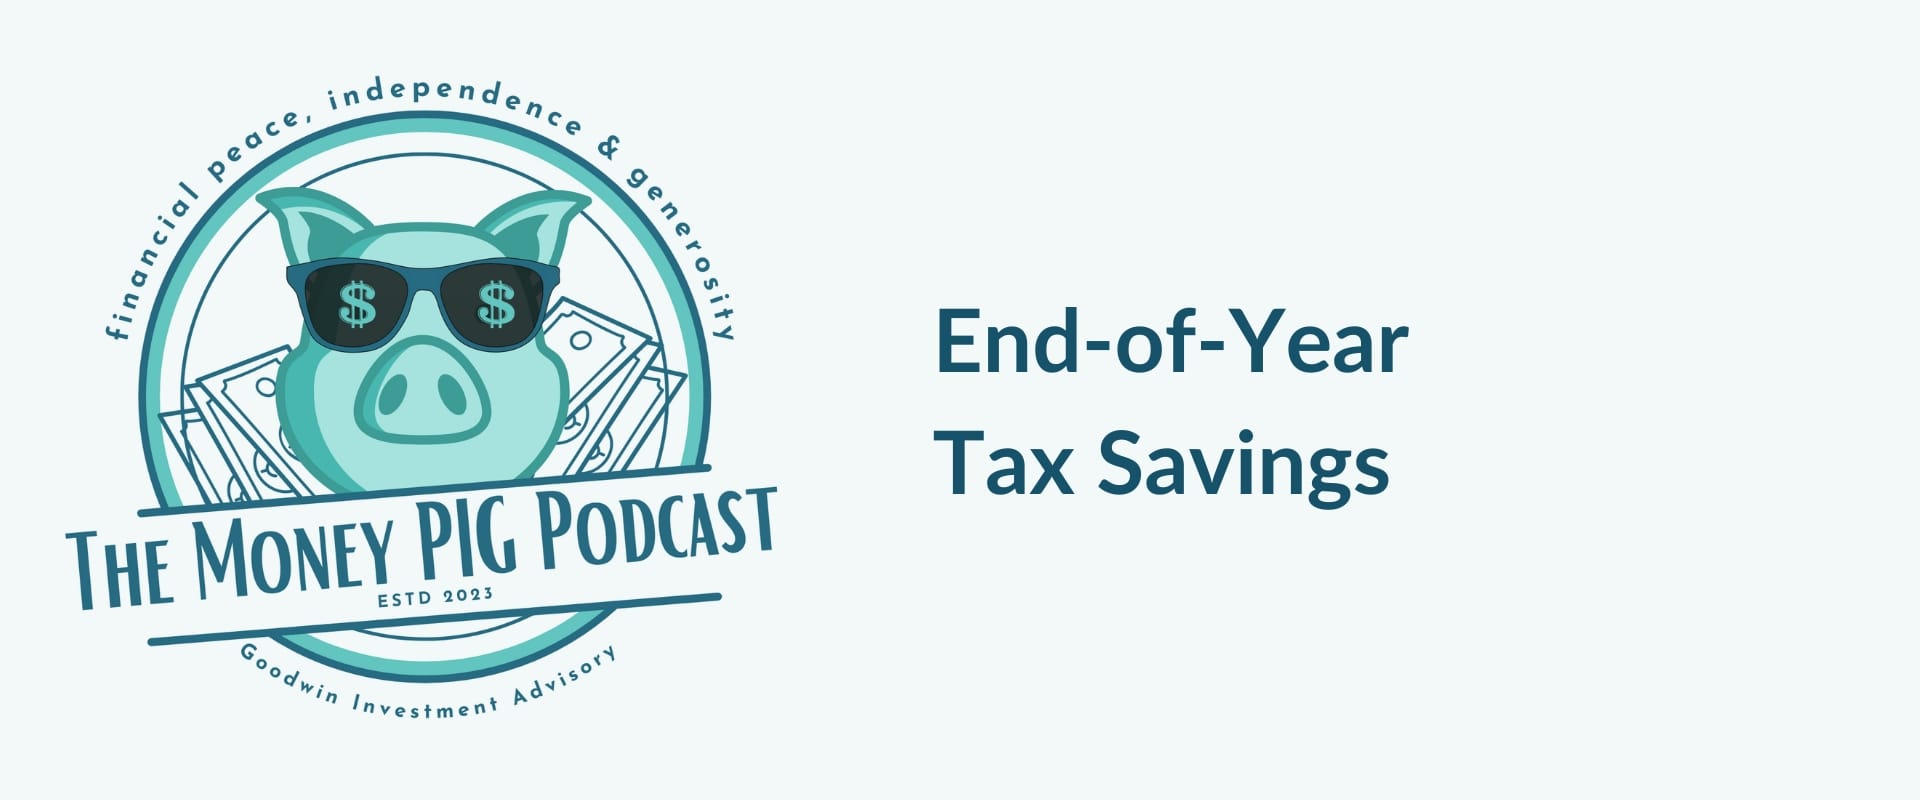 End-of-Year Tax Savings